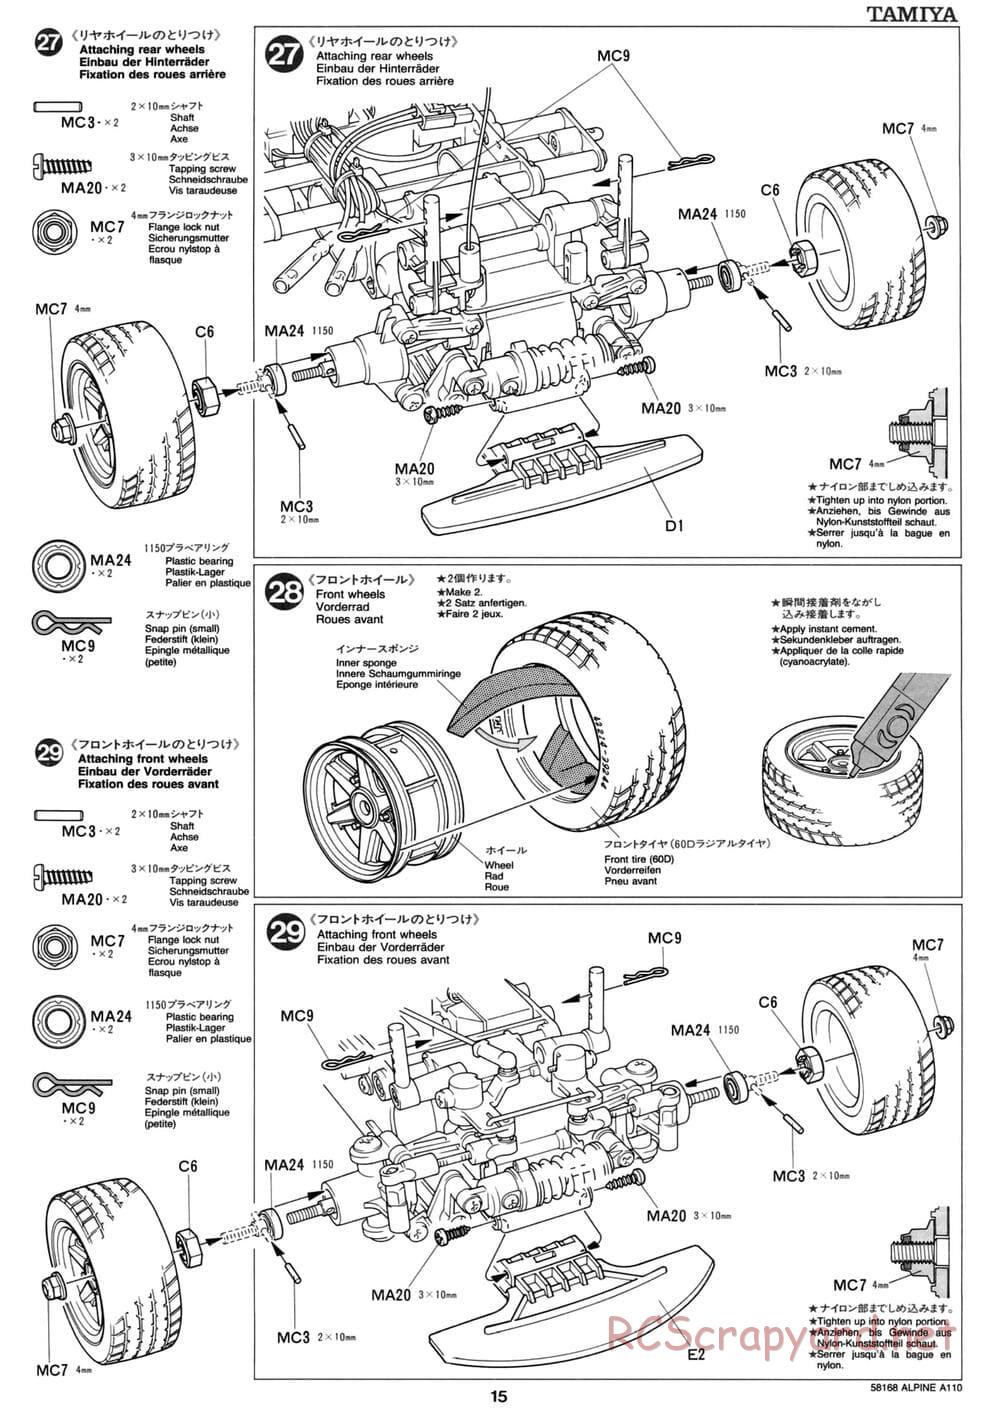 Tamiya - Alpine A110 - M02 Chassis - Manual - Page 15